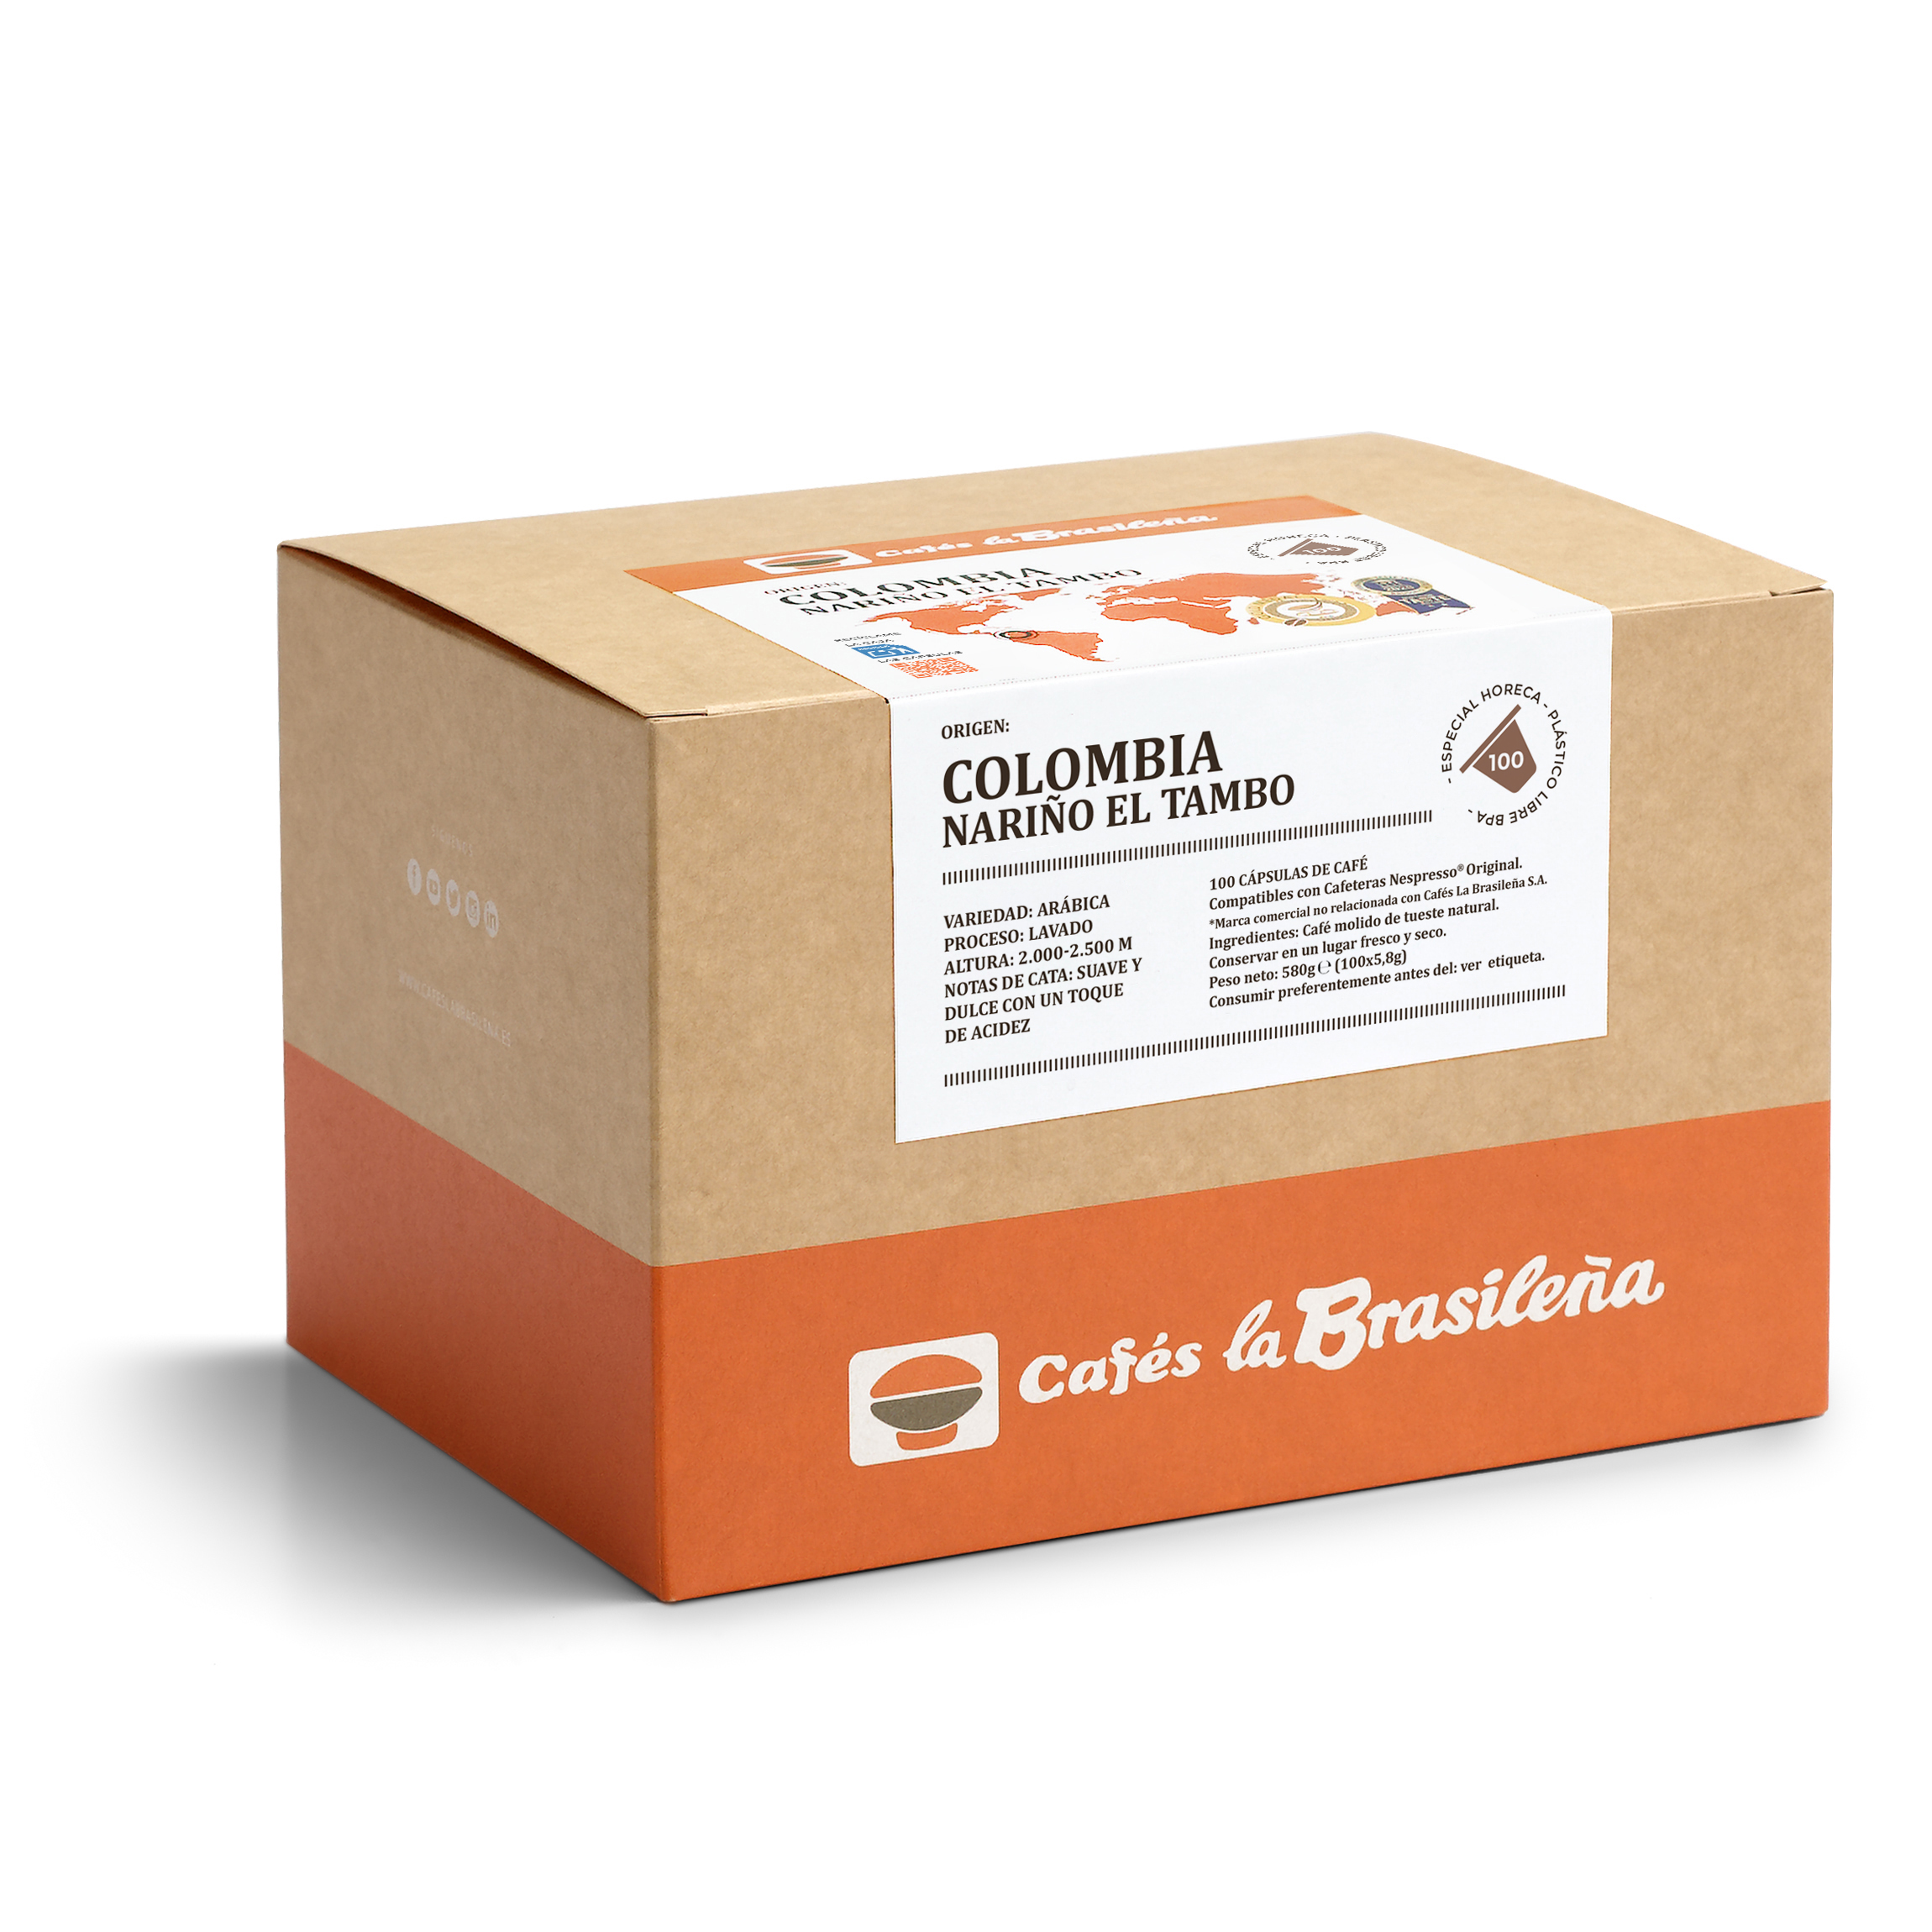 Caja Coffee box cápsulas Nespresso